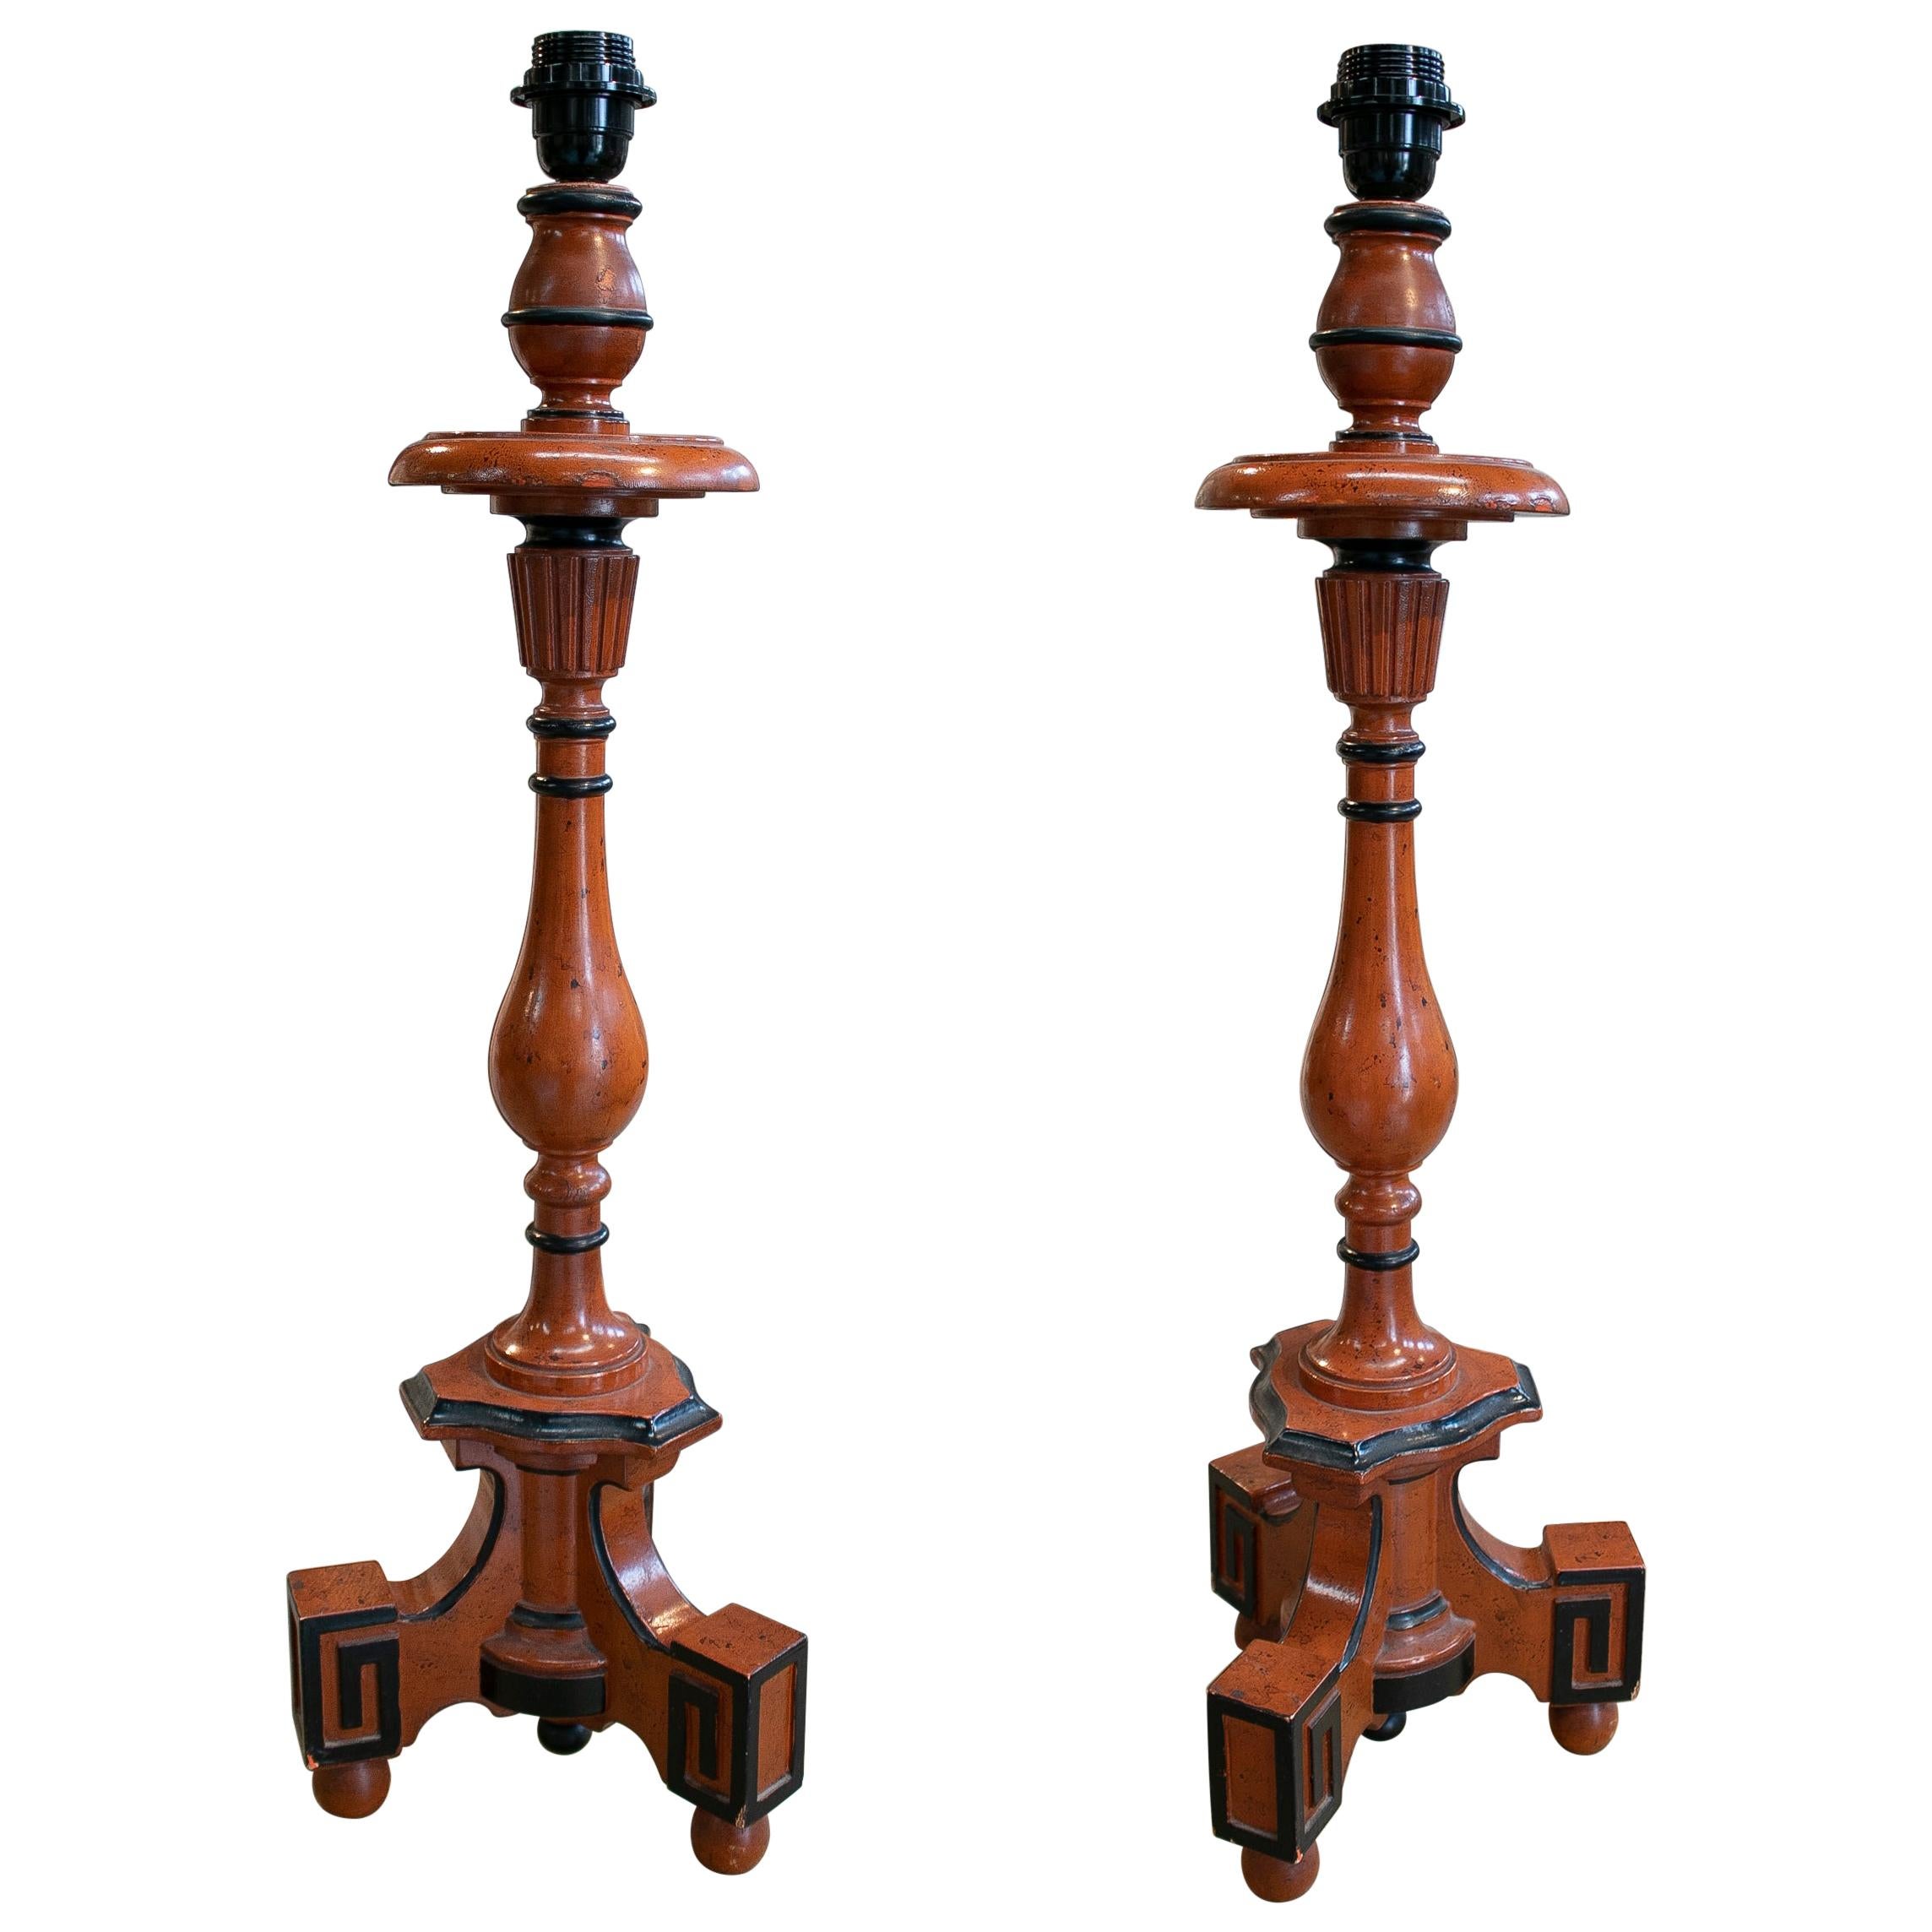 Pair of 19th Century Spanish Painted Wooden "Torchere" Pricket Sticks